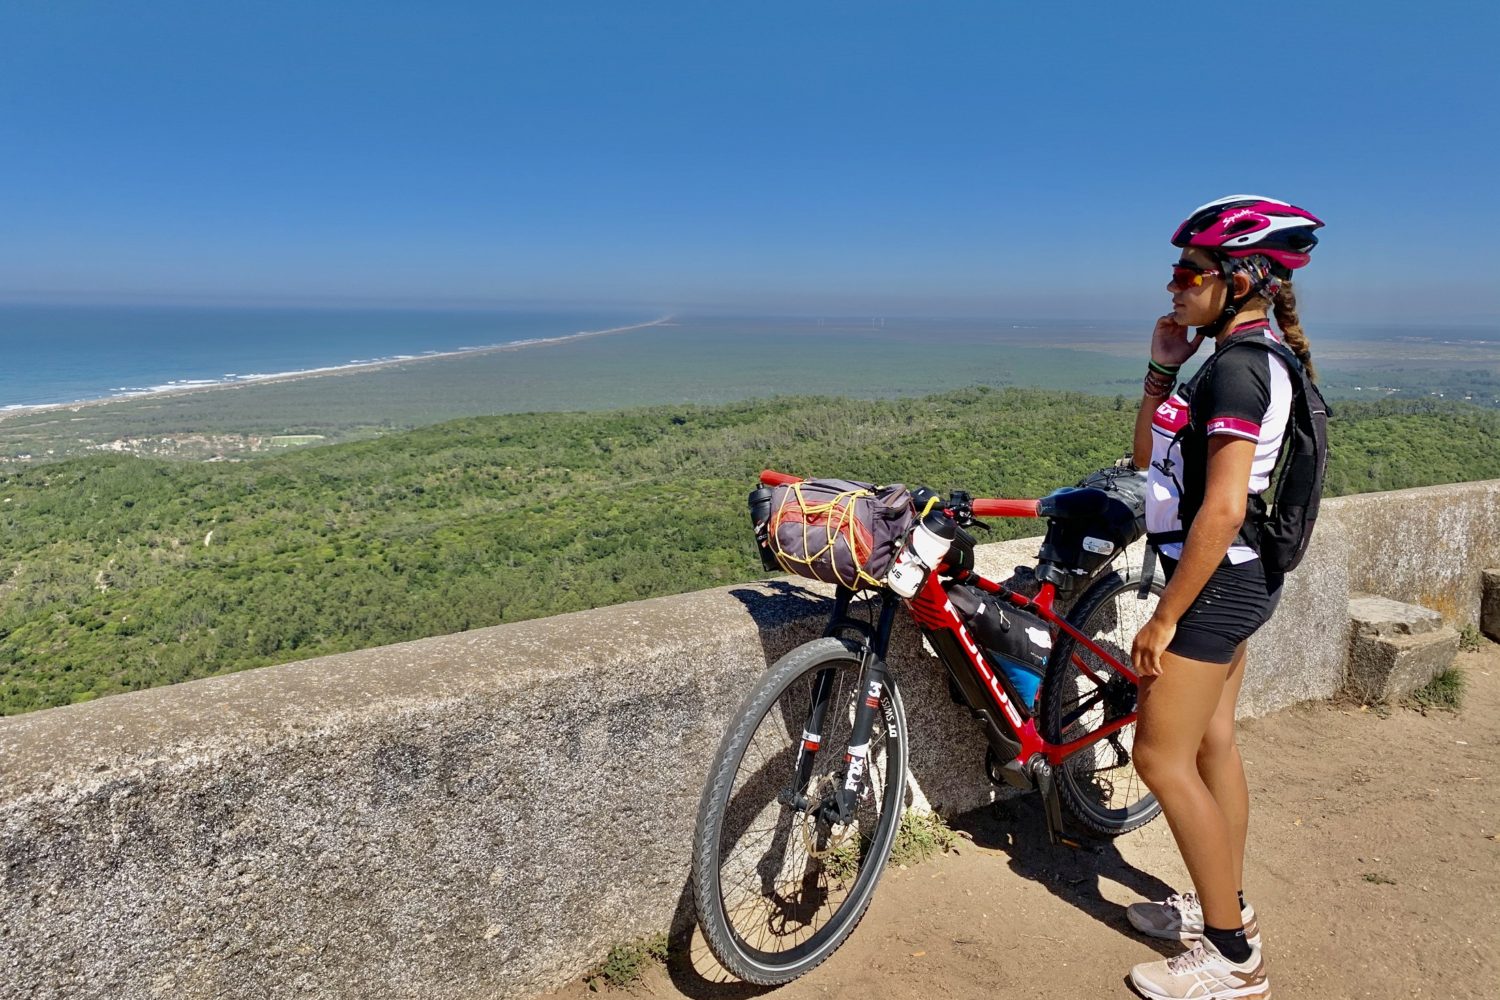 Portugal bike tour